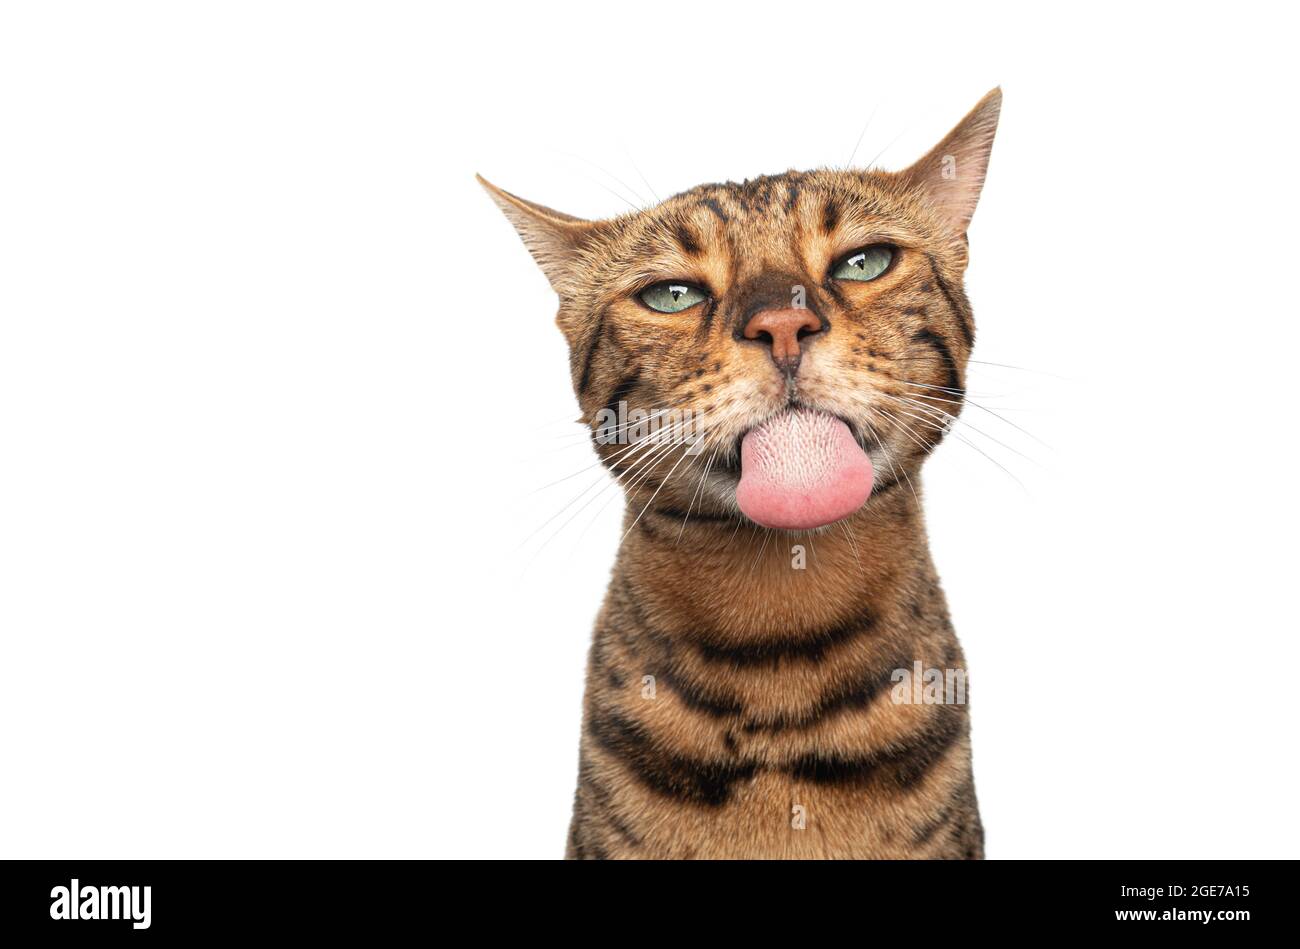 marrón moteado gato bengal con ojos verdes haciendo cara graciosa que  sobresale lengua mirando tonto aislado sobre fondo blanco Fotografía de  stock - Alamy